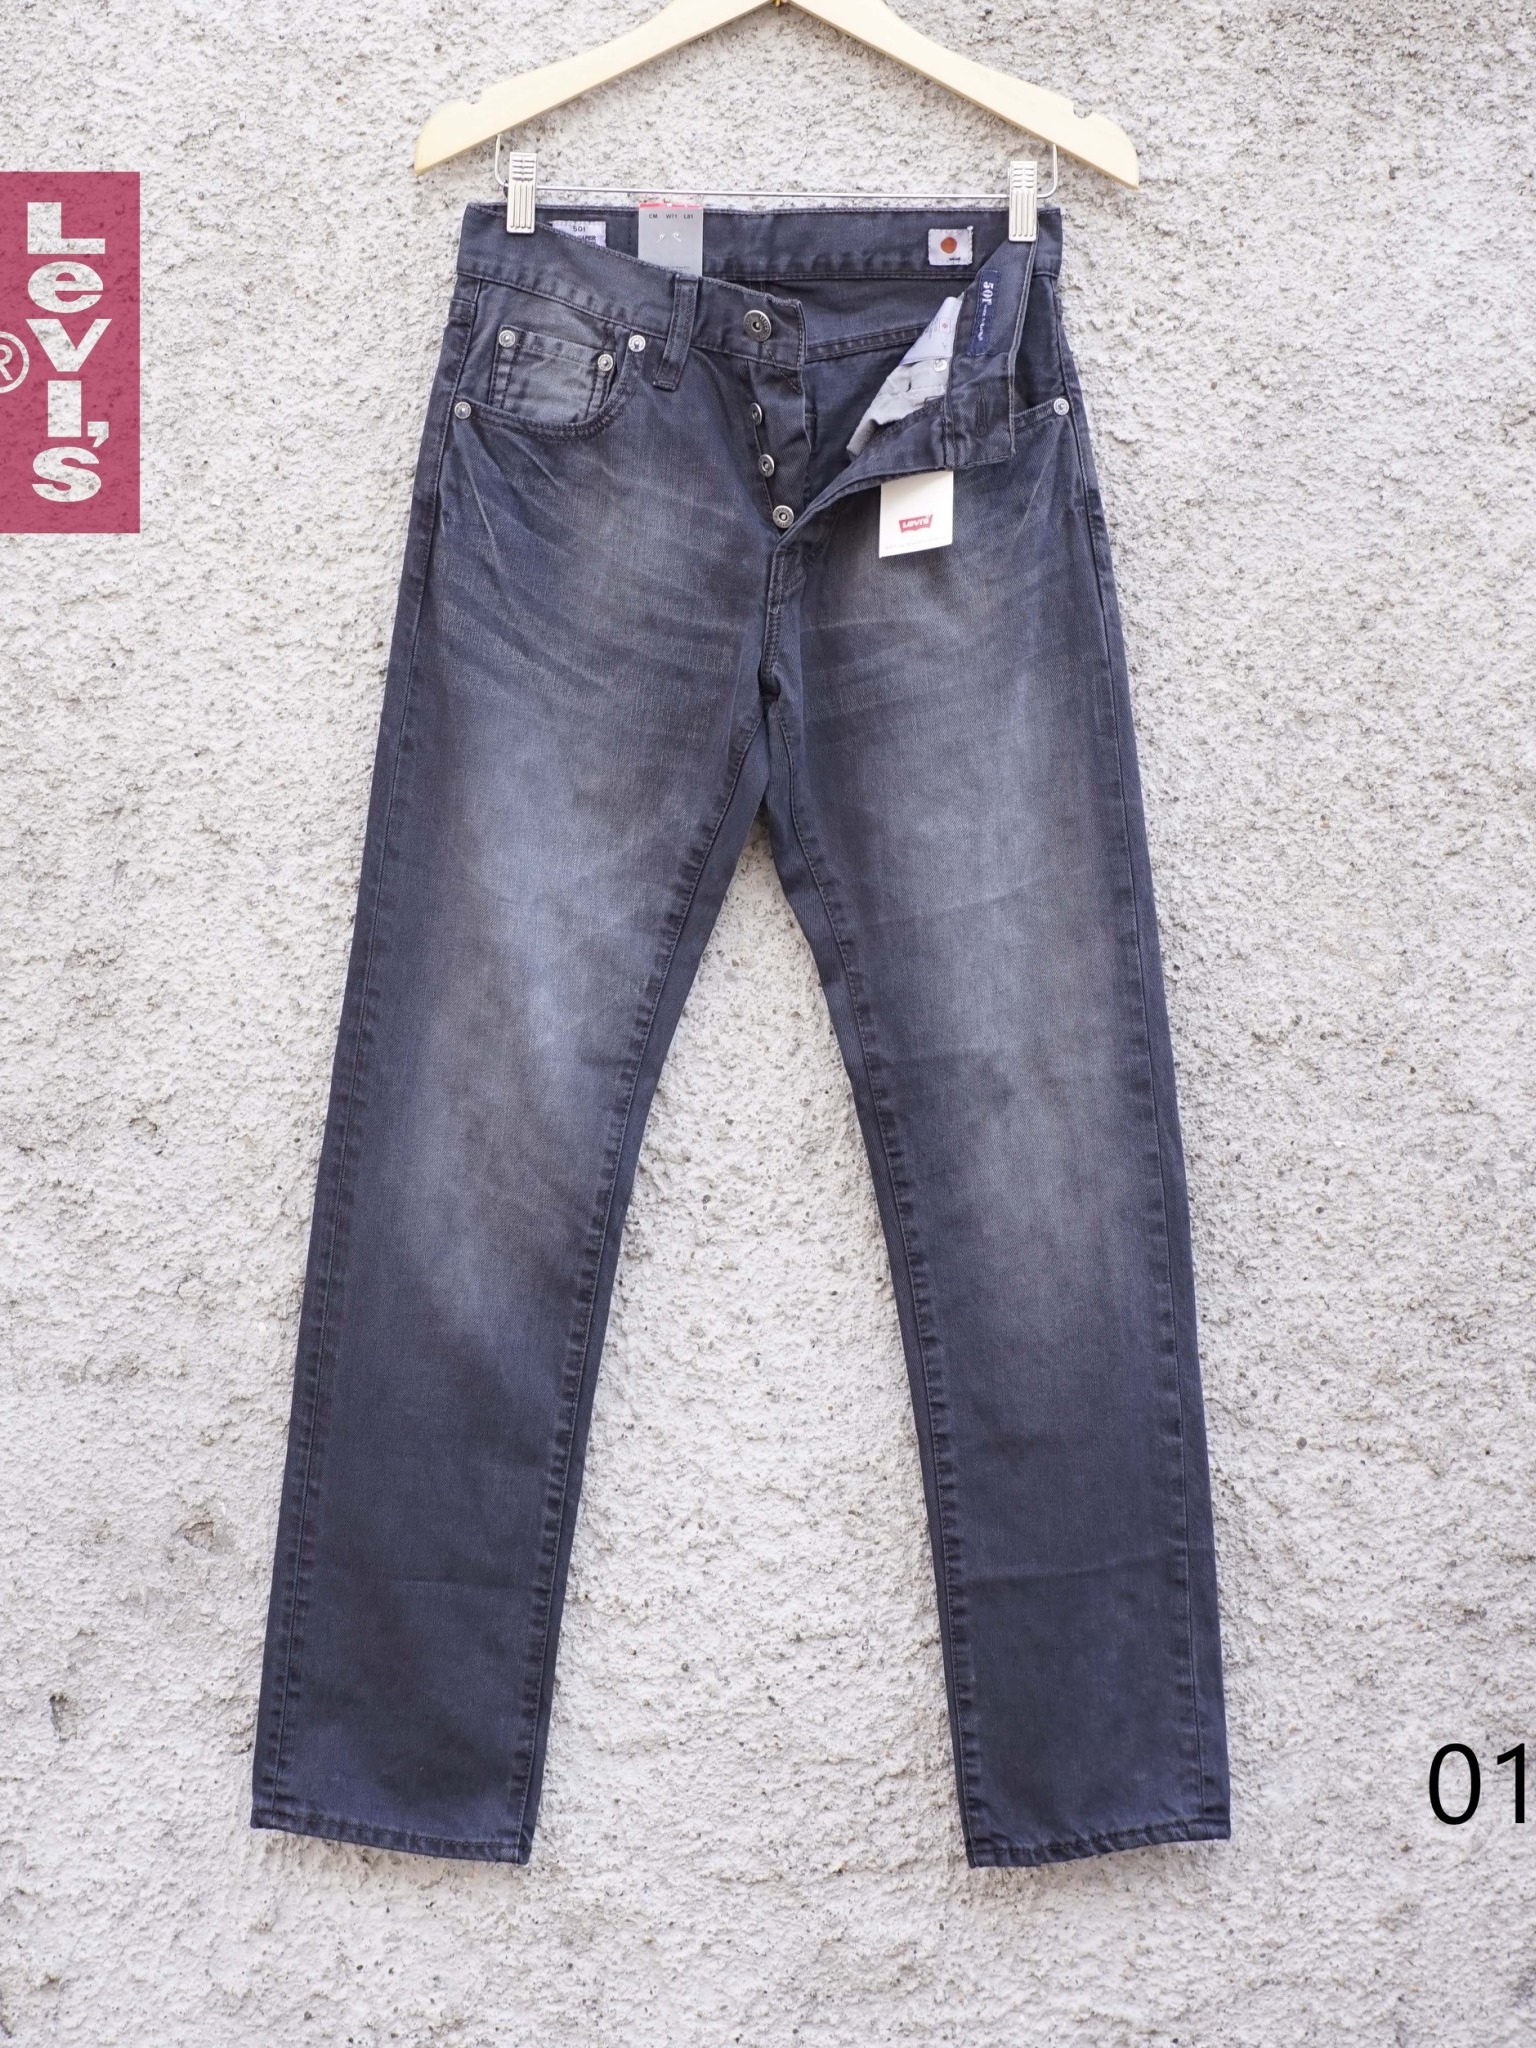 Jeans 501 Dark Grey 01 - Made in Japan